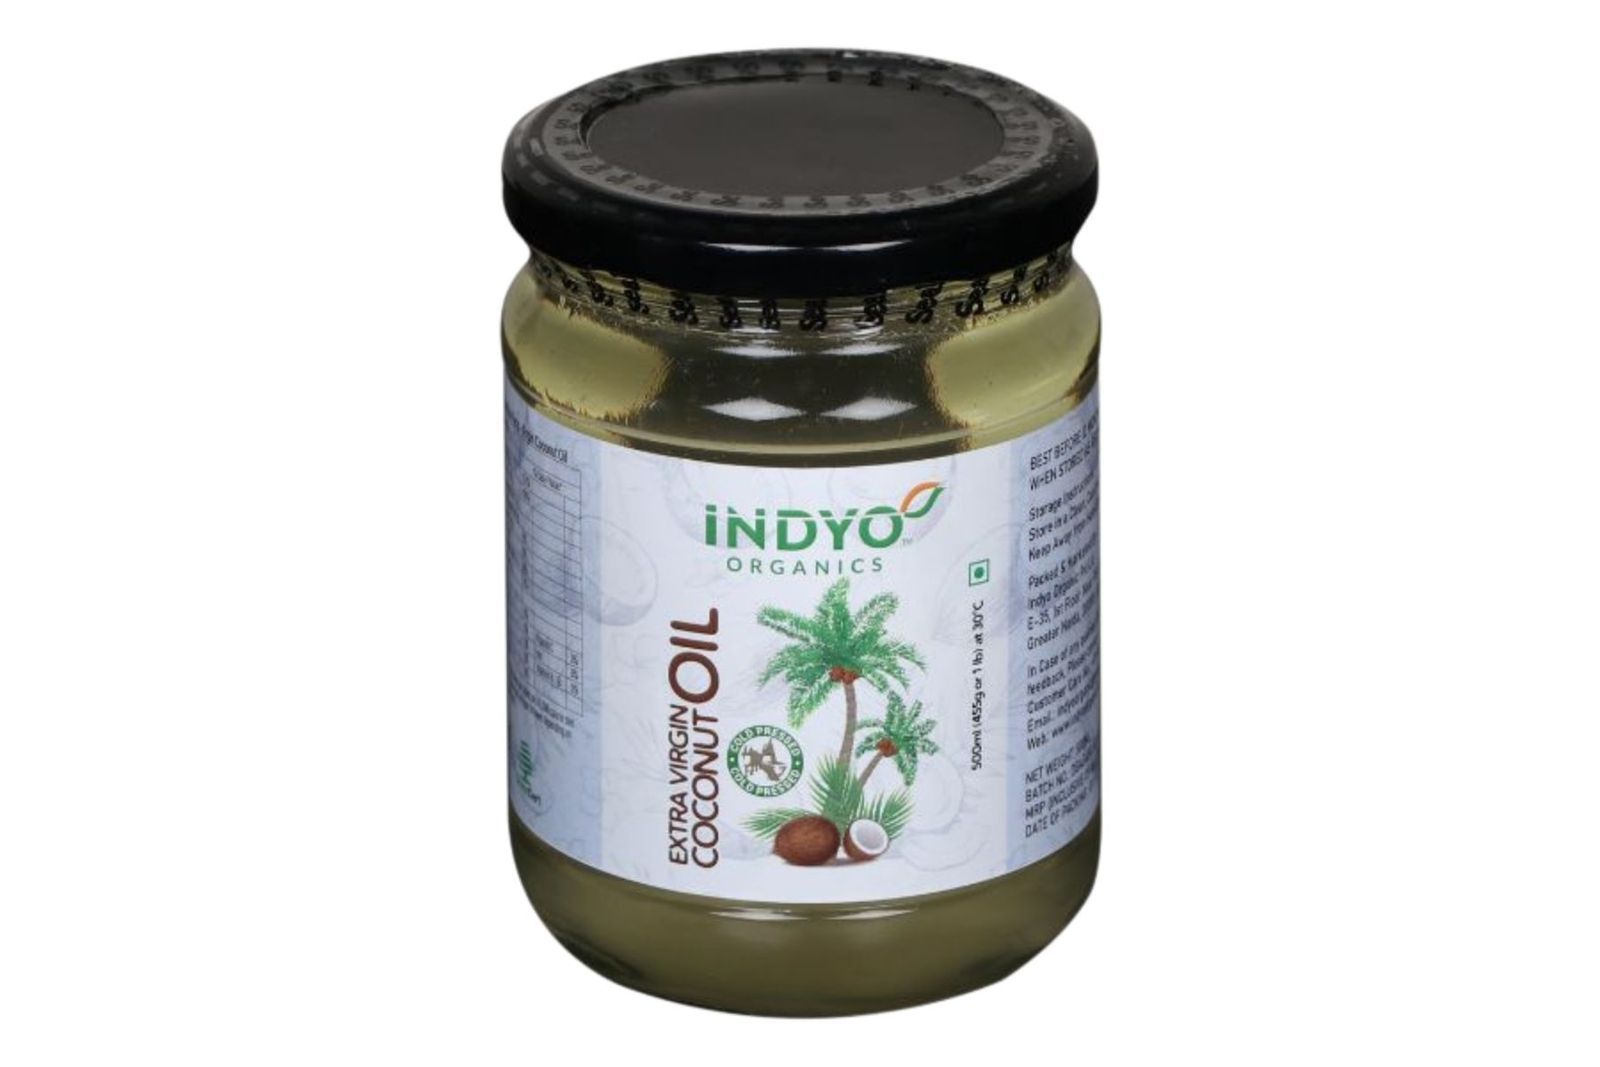 Indyo Organics Virgin Coconut Oil